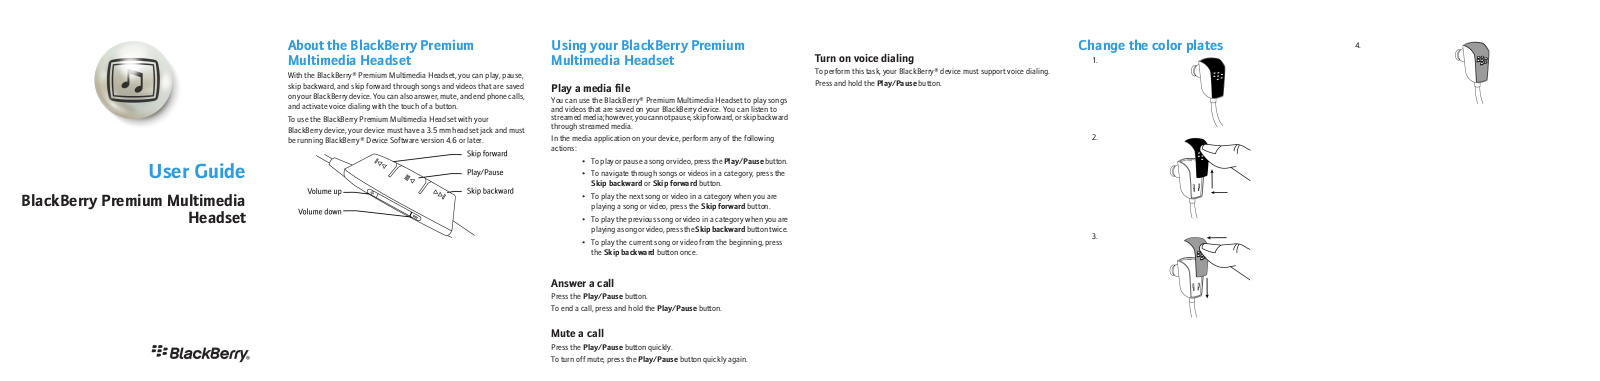 Blackberry PREMIM MULTIMEDIA HEADSET ERSTE SCHRITTE Manual